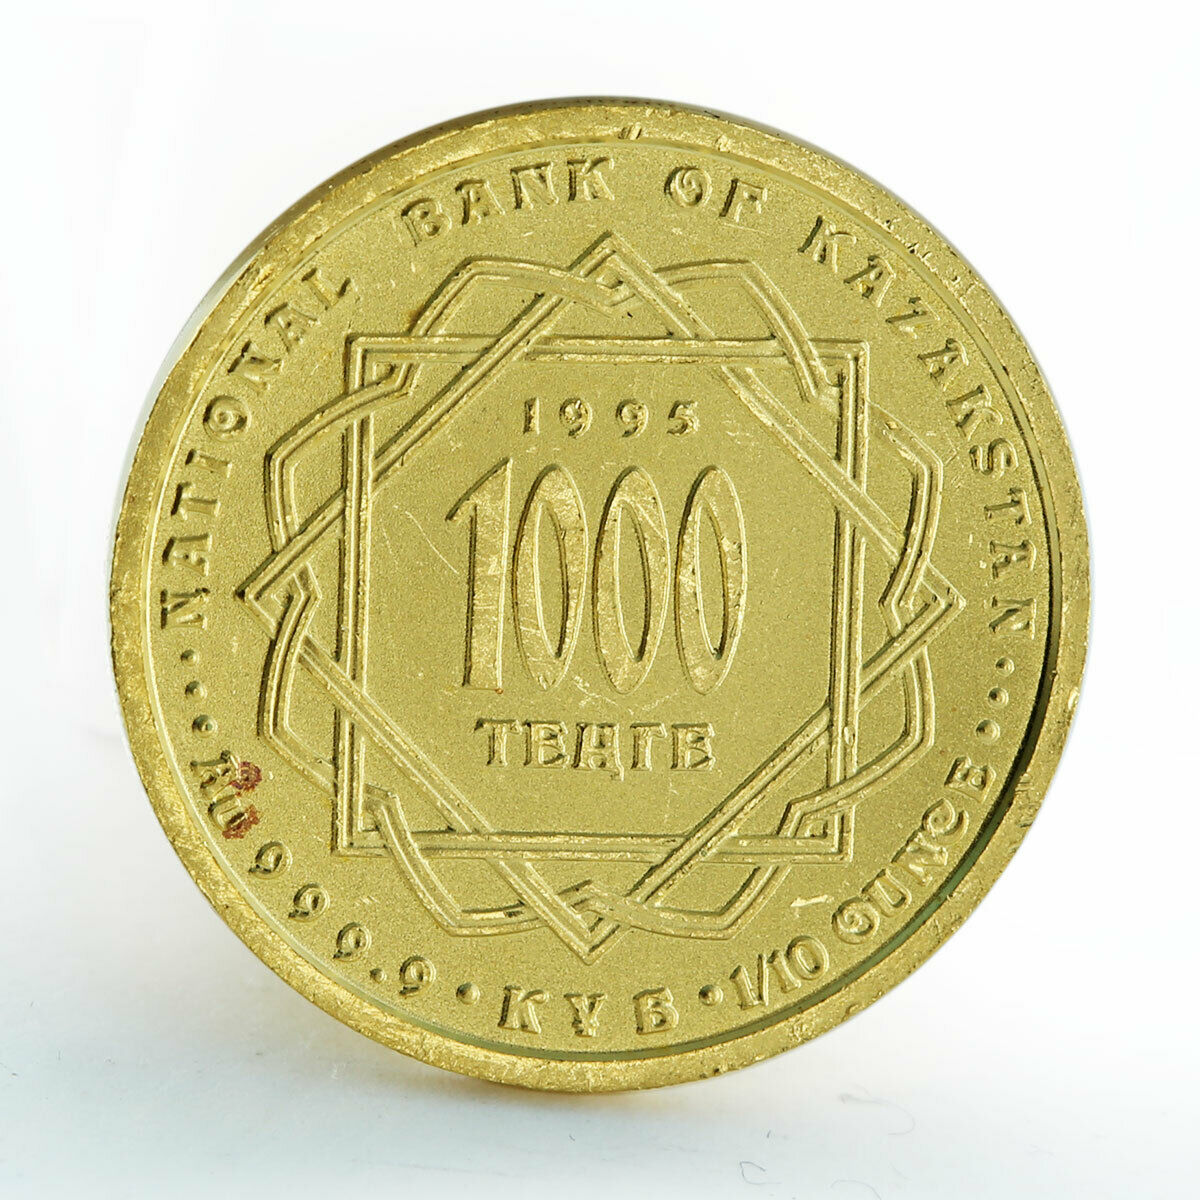 Kazakhstan 1000 tenge Silk Road gold coin 1995